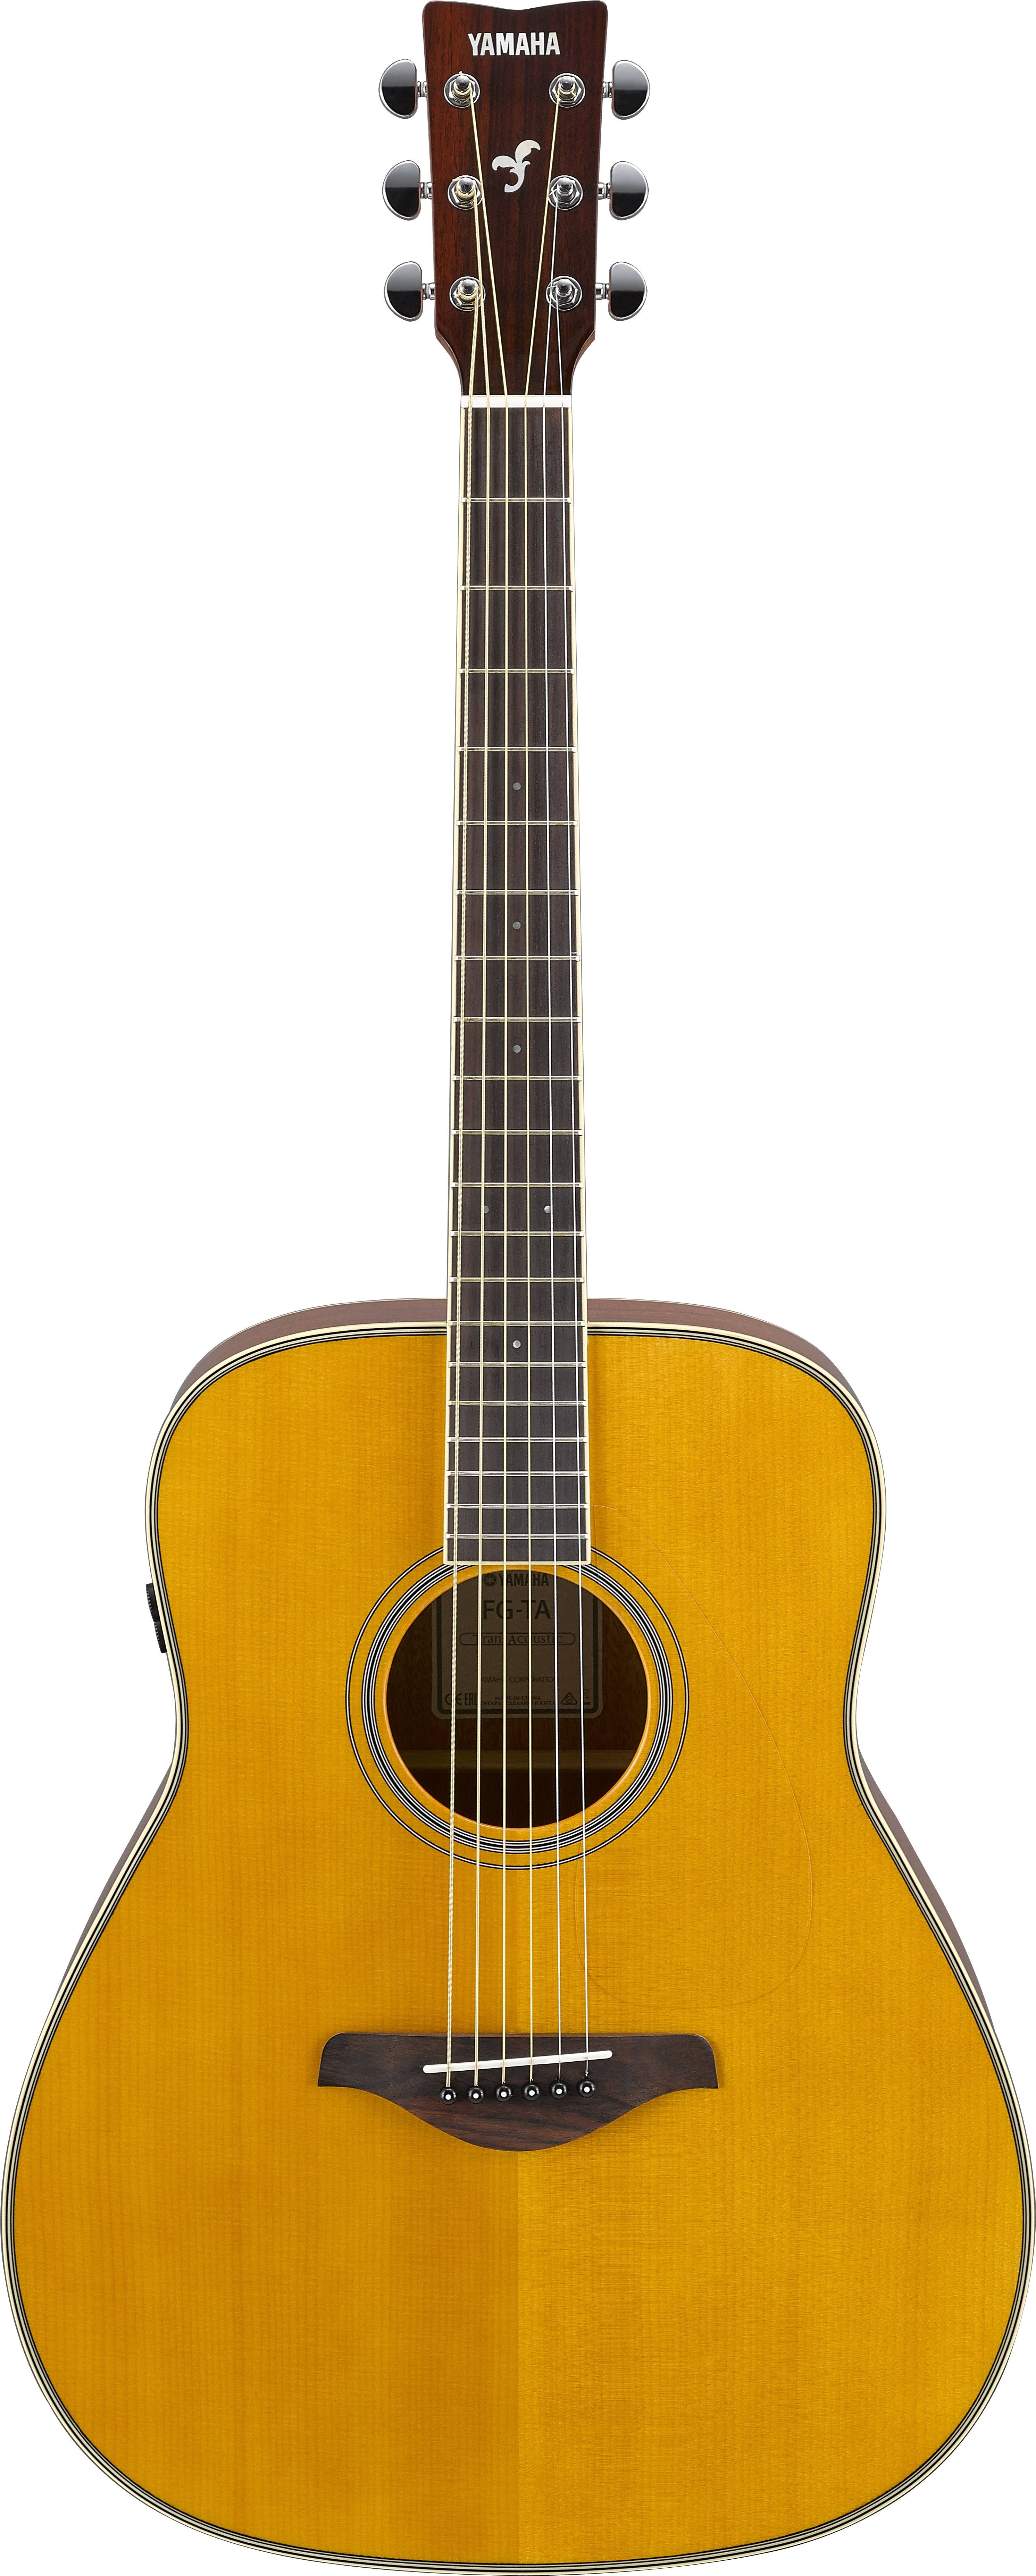 Yamaha FGTA Transacoustic Guitar - Vintage Tint